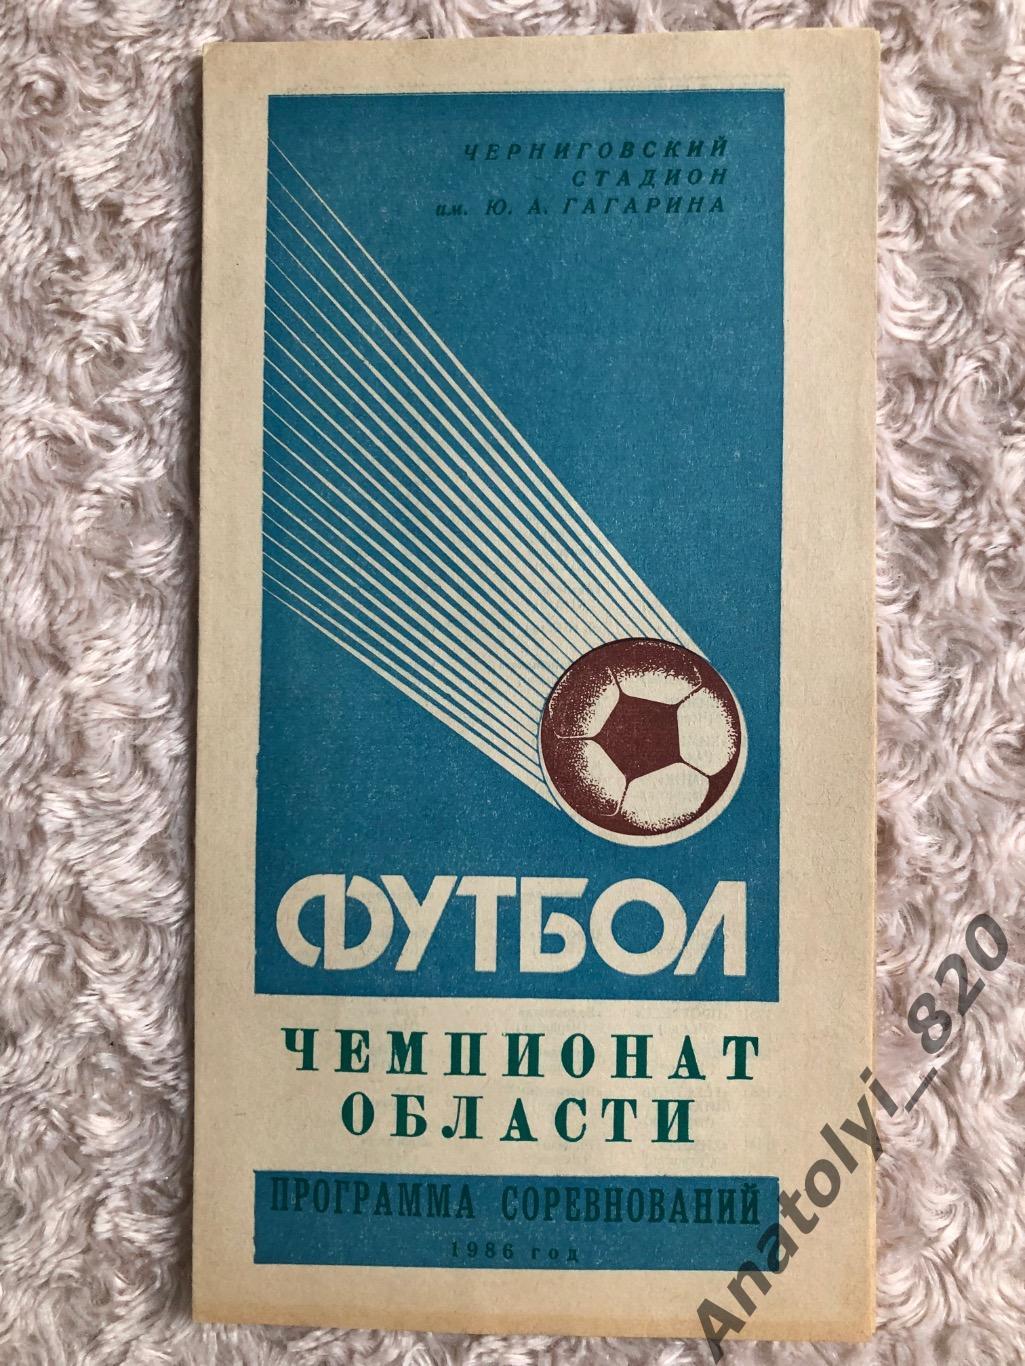 Десна Чернигов 1986 год, программа соревнований